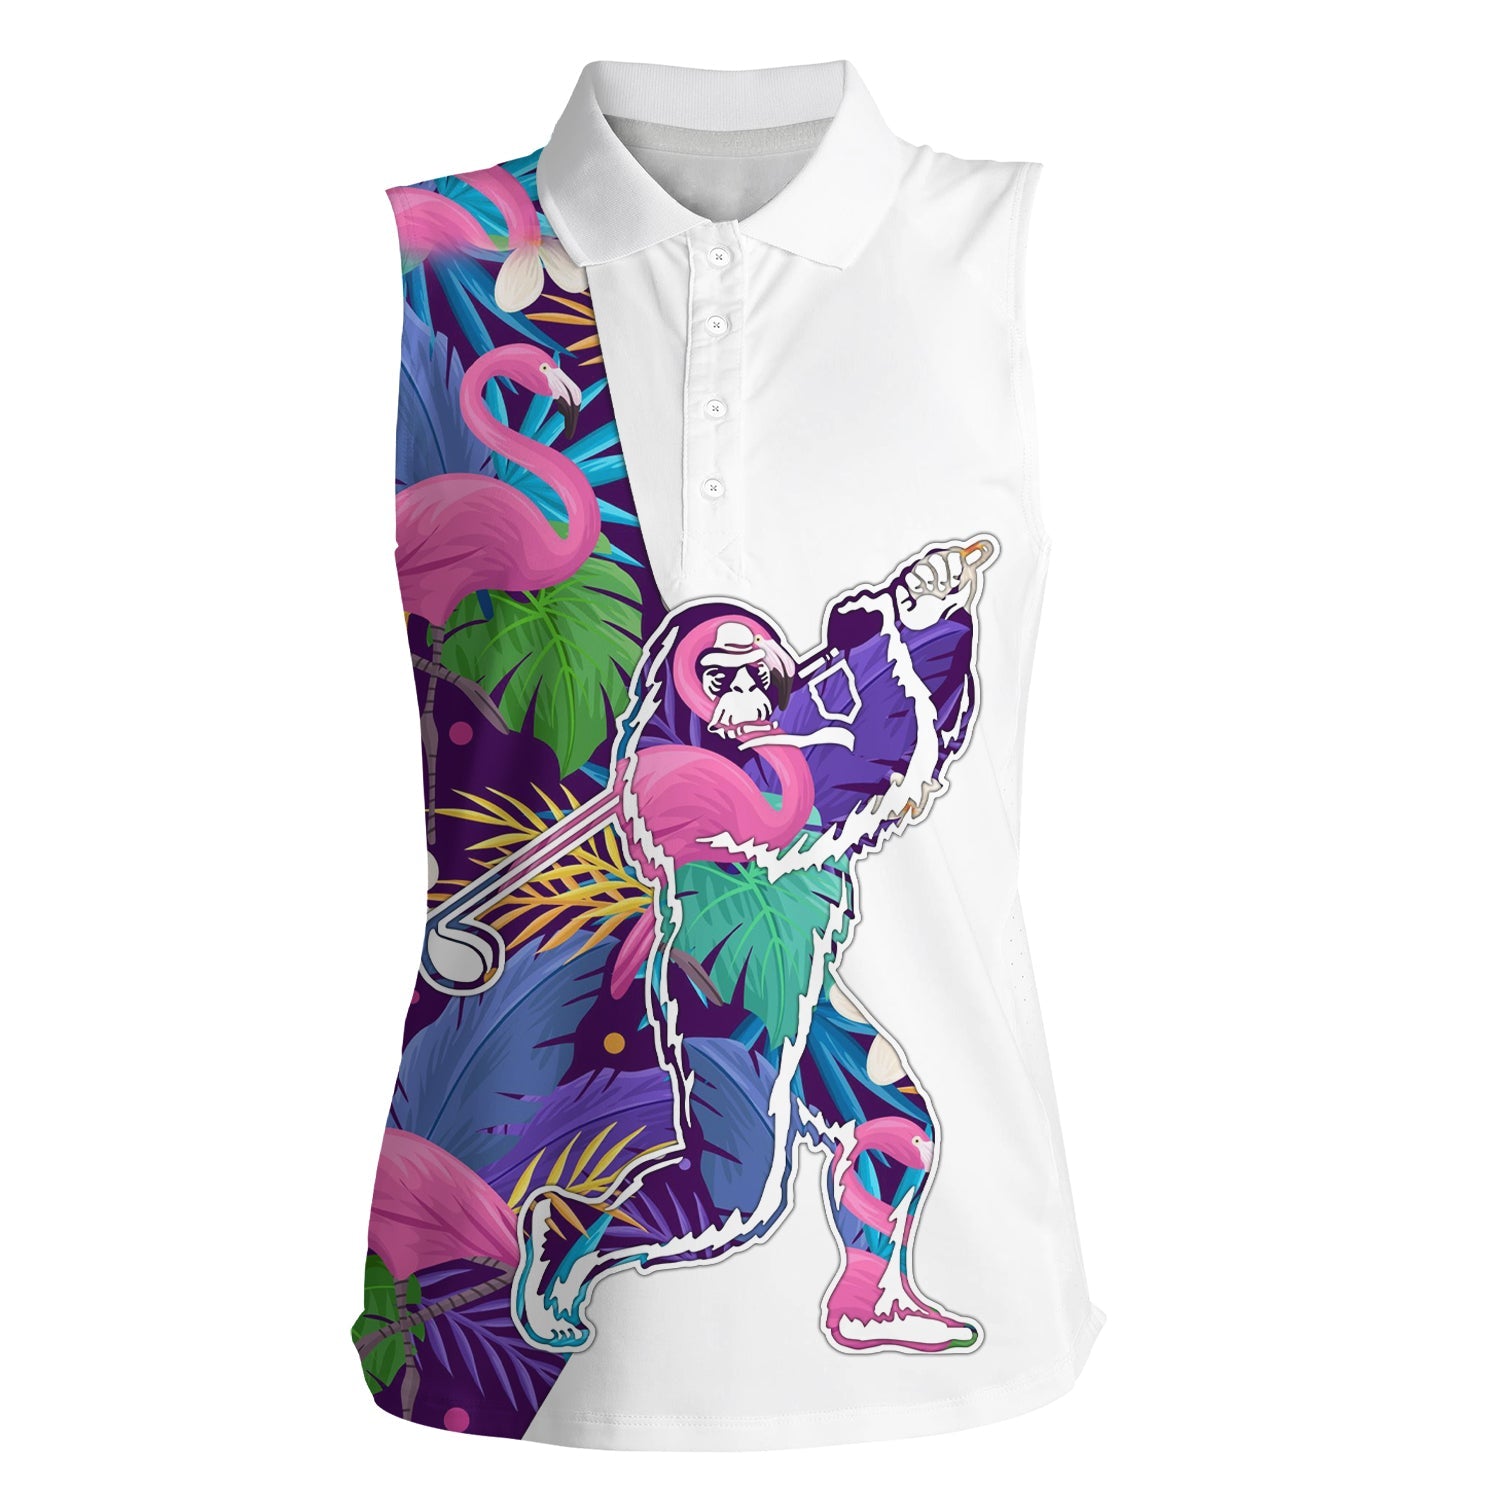 Bigfoot womens sleeveless golf polo shirt colorful tropical flamingo sasquatch playing golf apparel